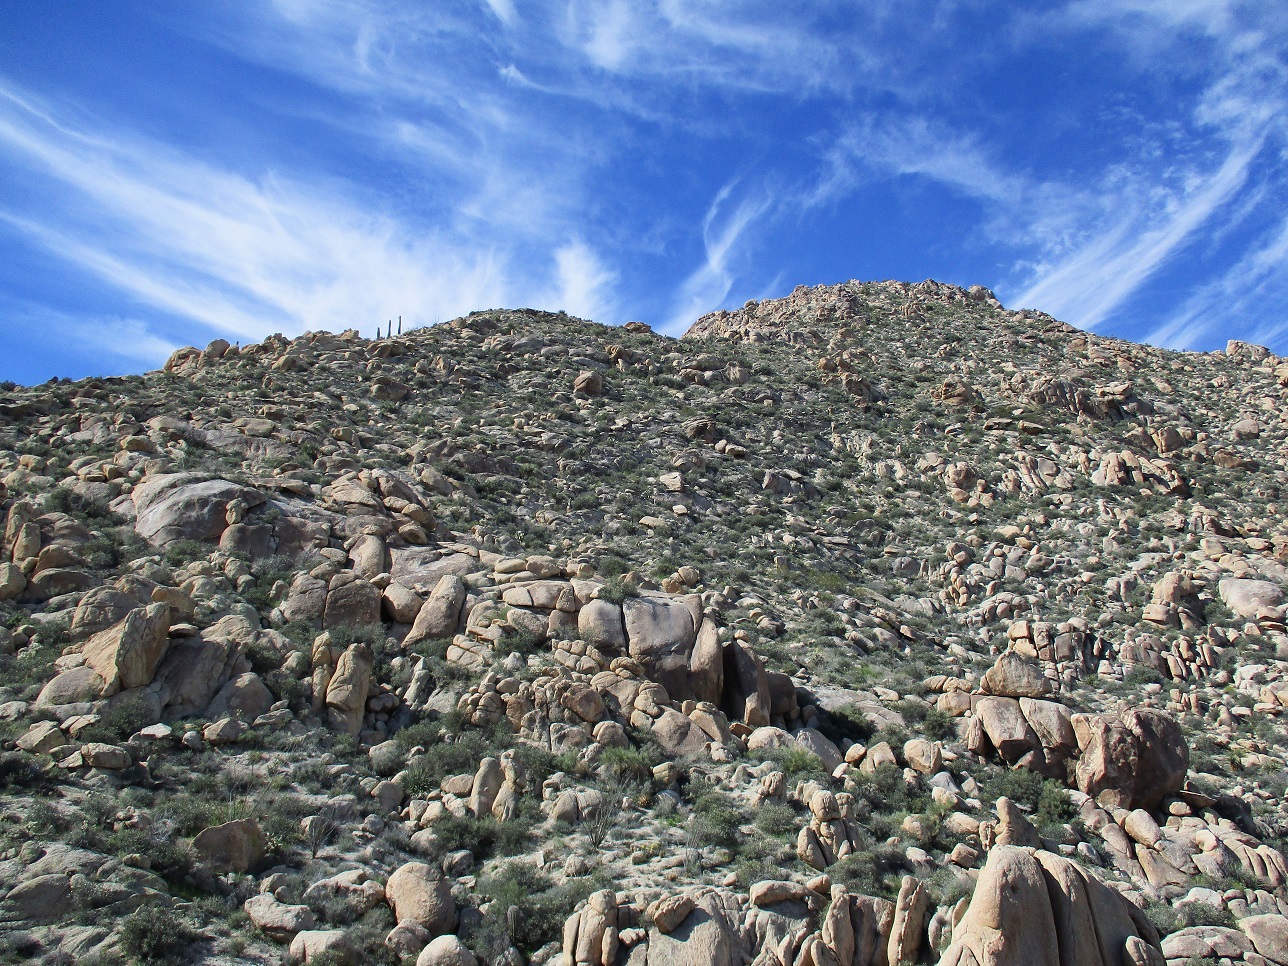 Salome Peak, Arizona